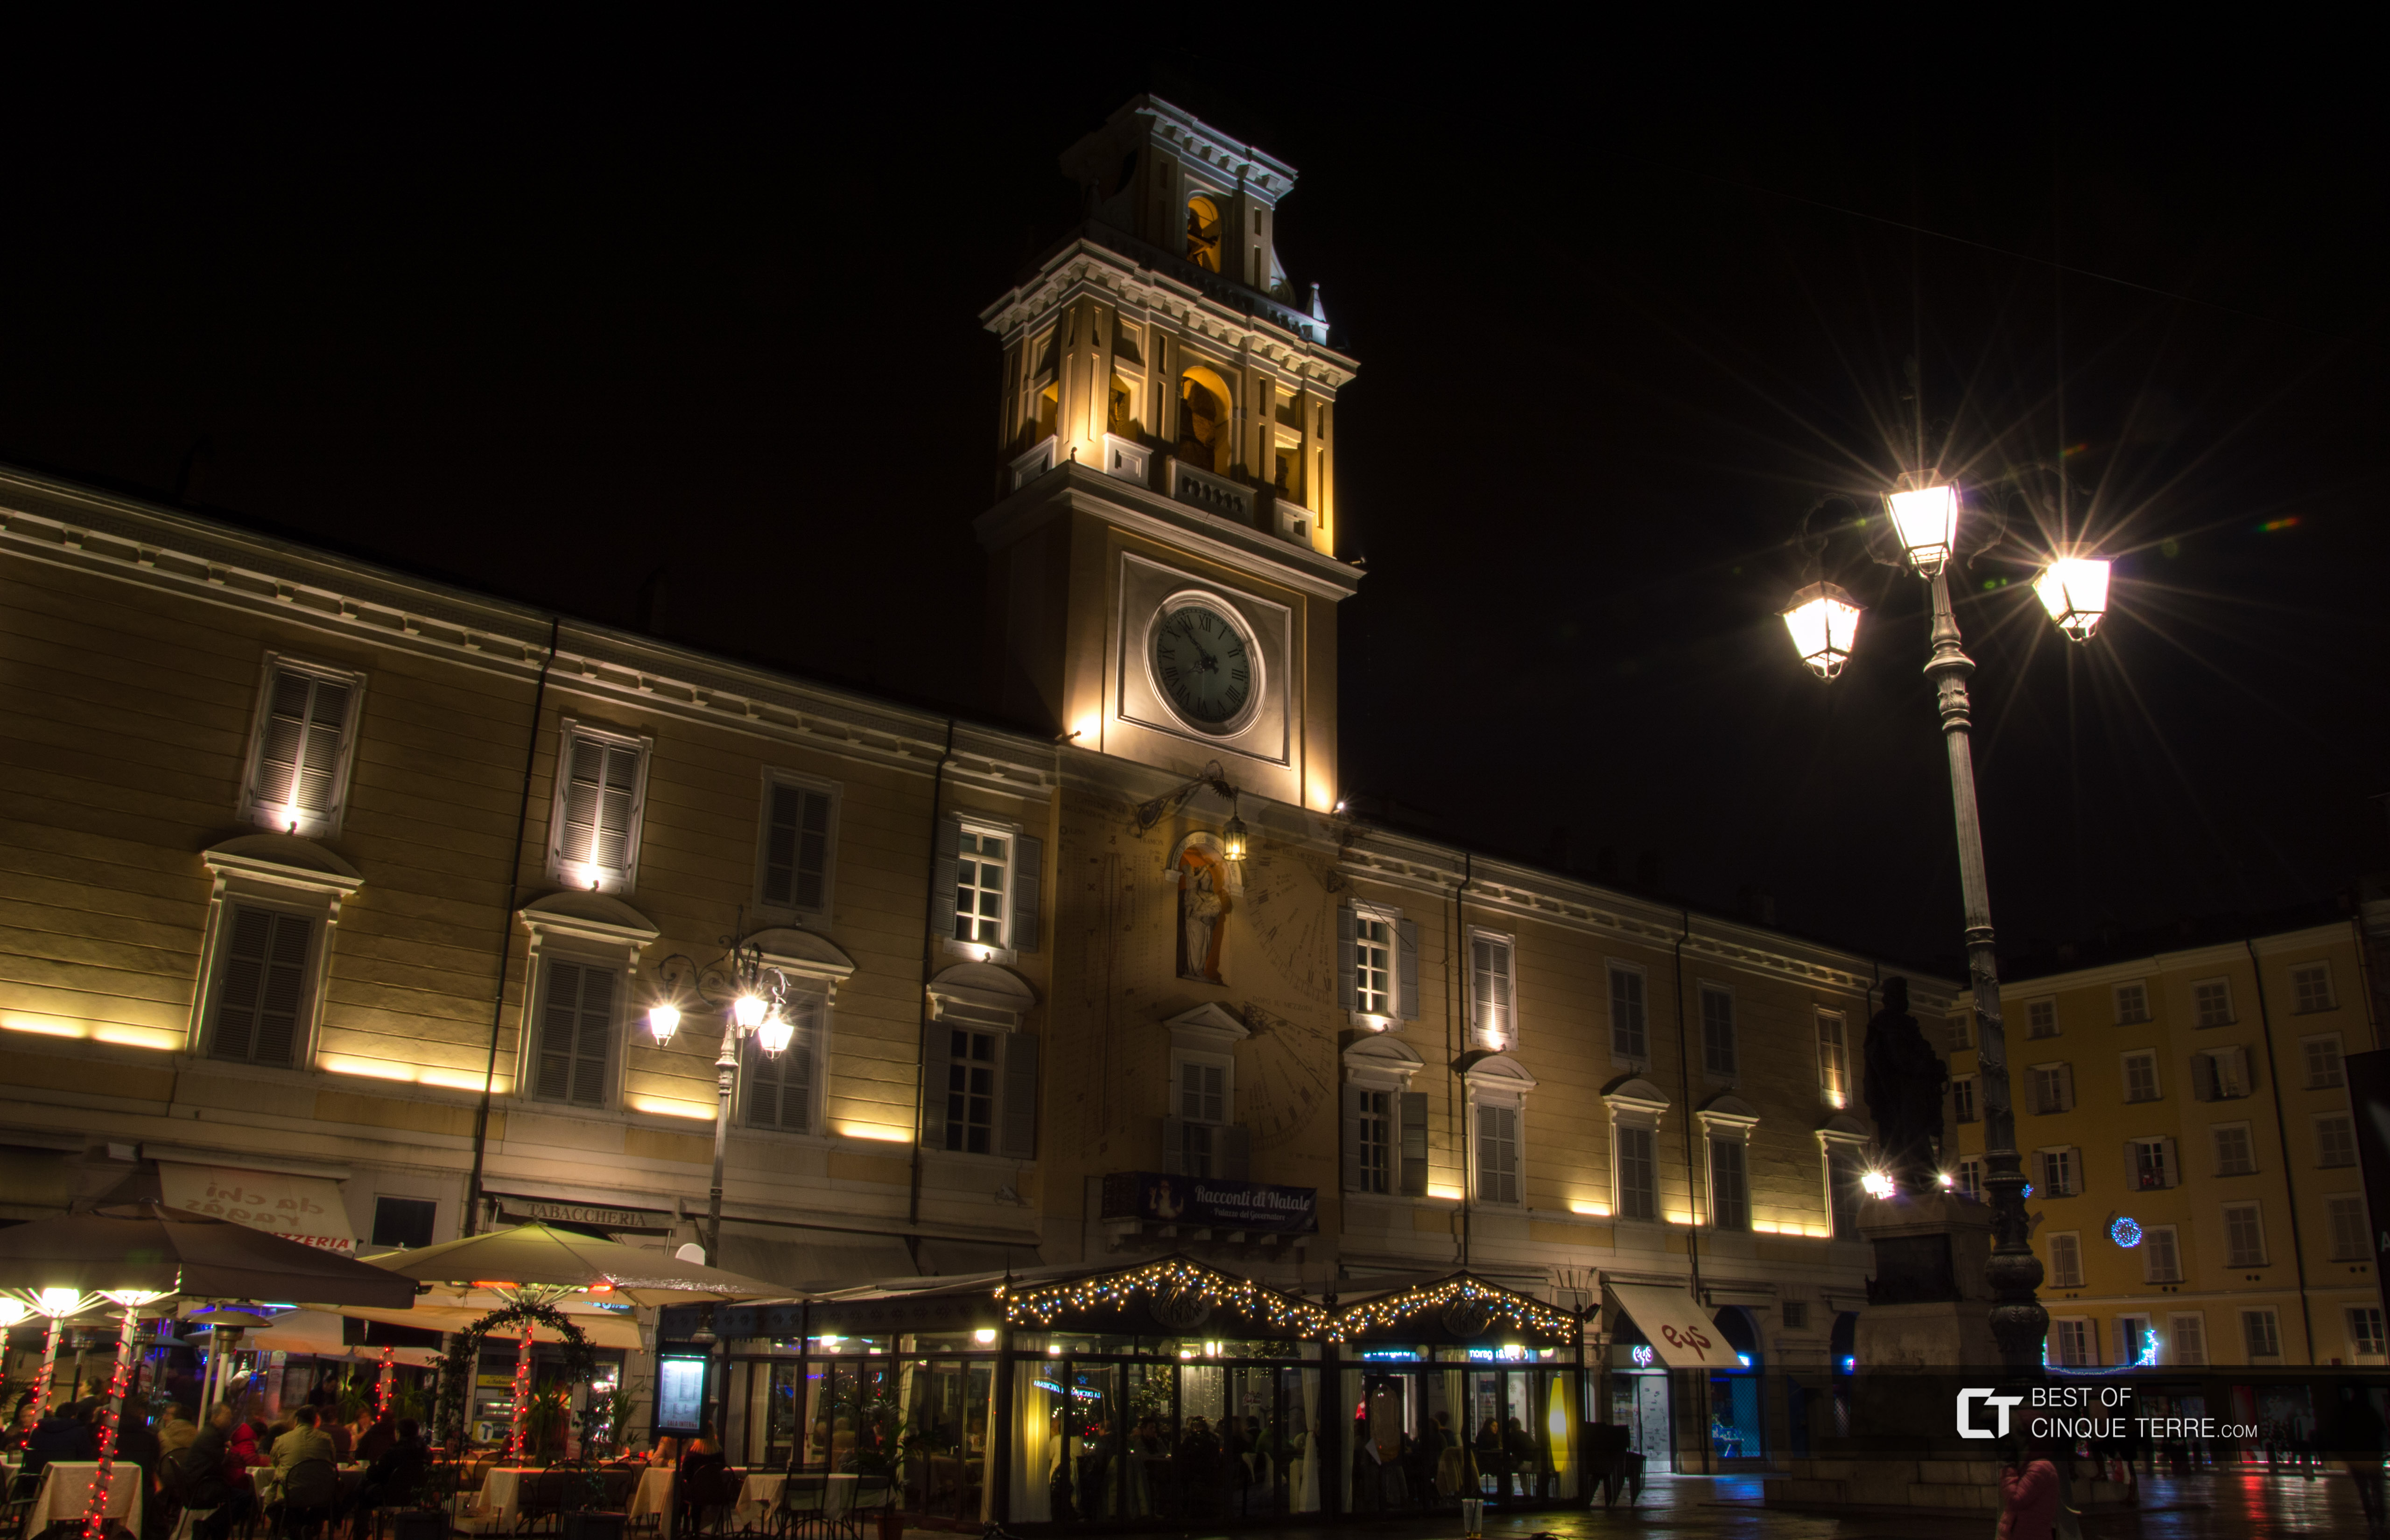 Central Garibaldi Square in the evening, Parma, Italy